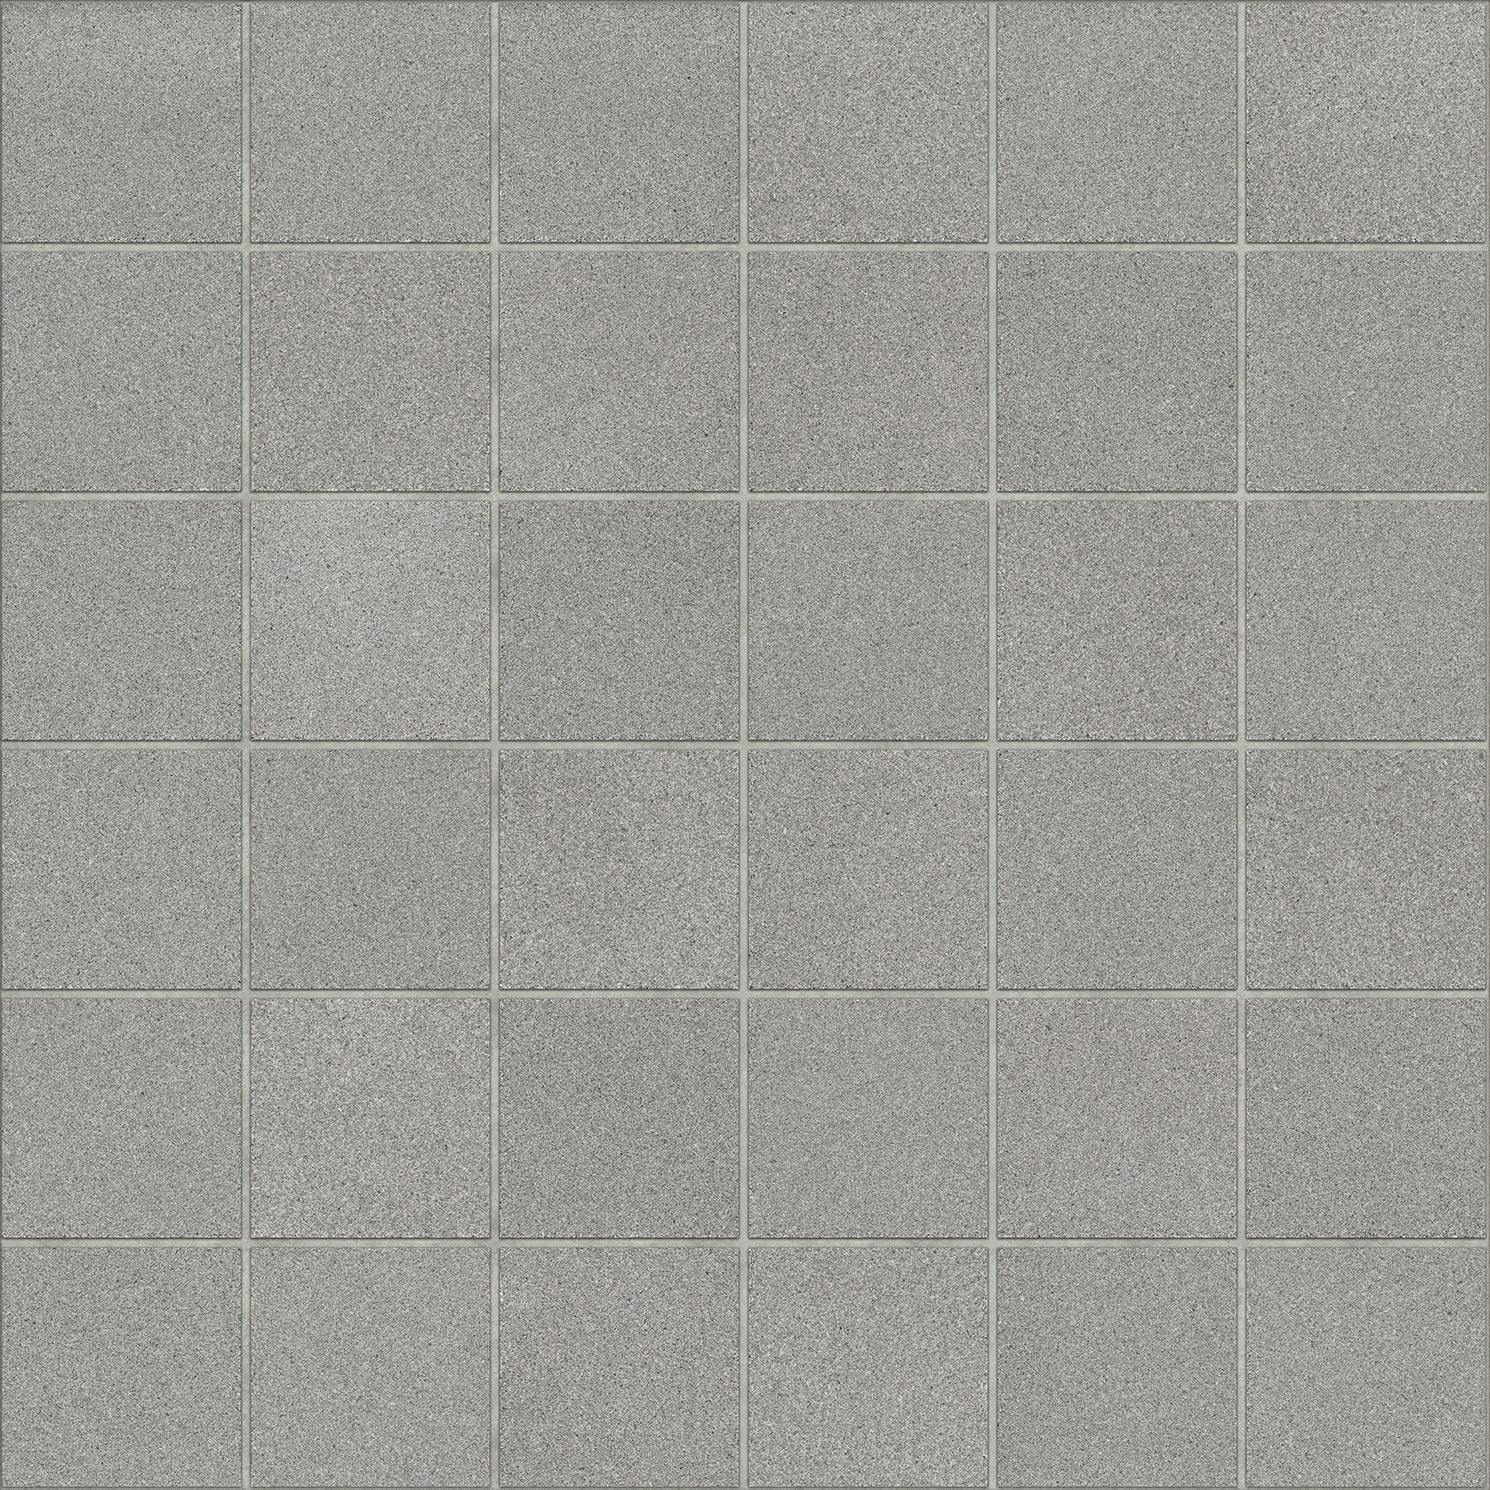 surface group international landmark masterplan stone cosmoplitan ash matte mosaic a straight stack 2x2 square 12x12x9 mm for outdoor application manufactured by landmark